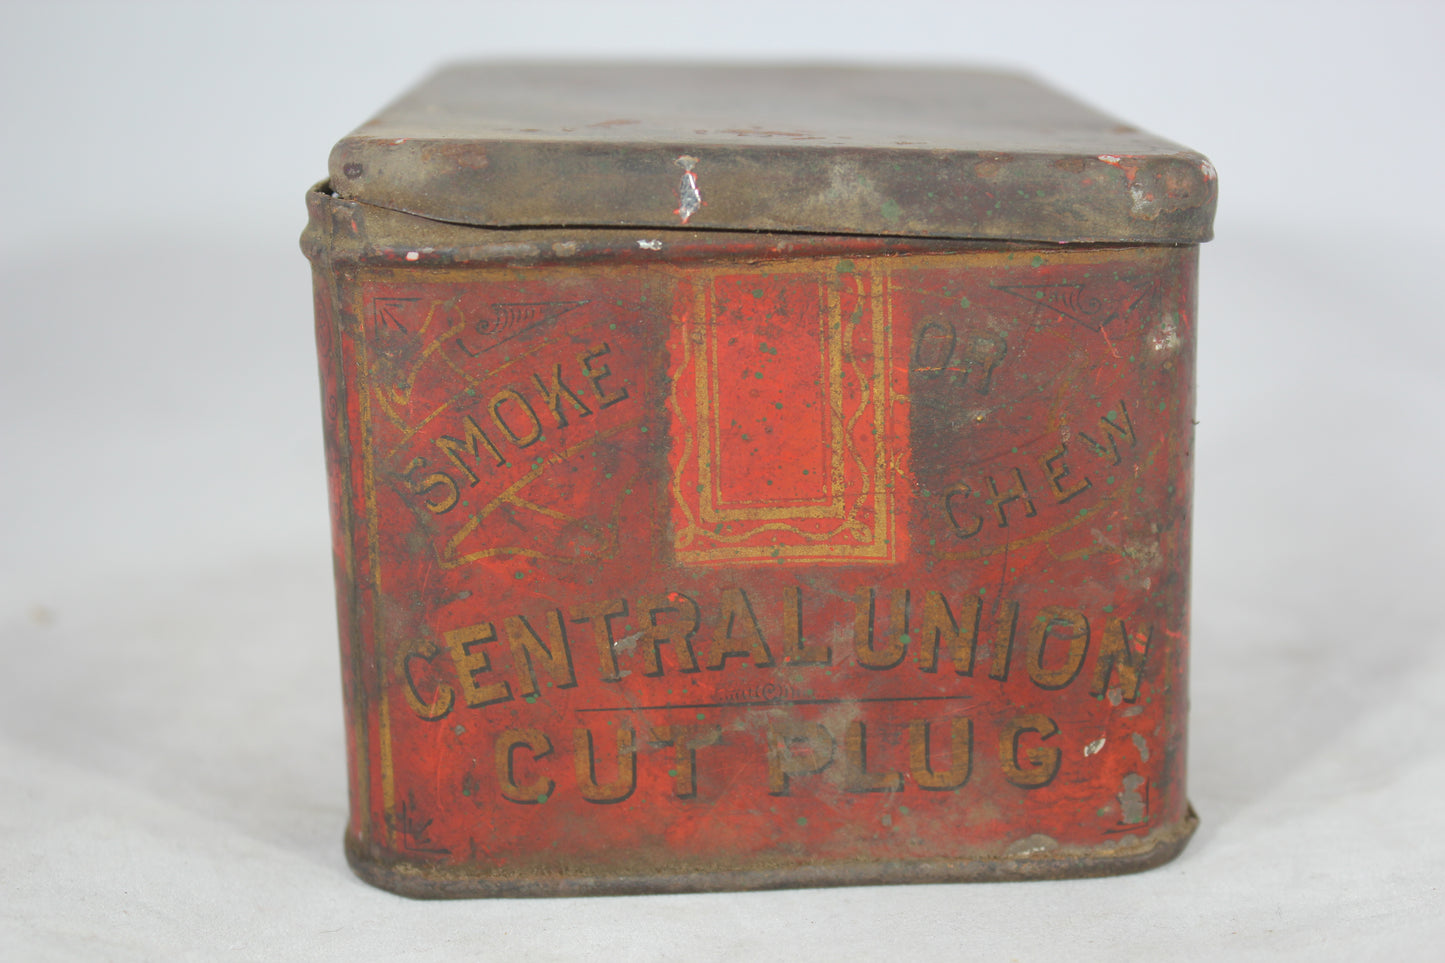 Central Union Cut Plug Tobacco Tin Can